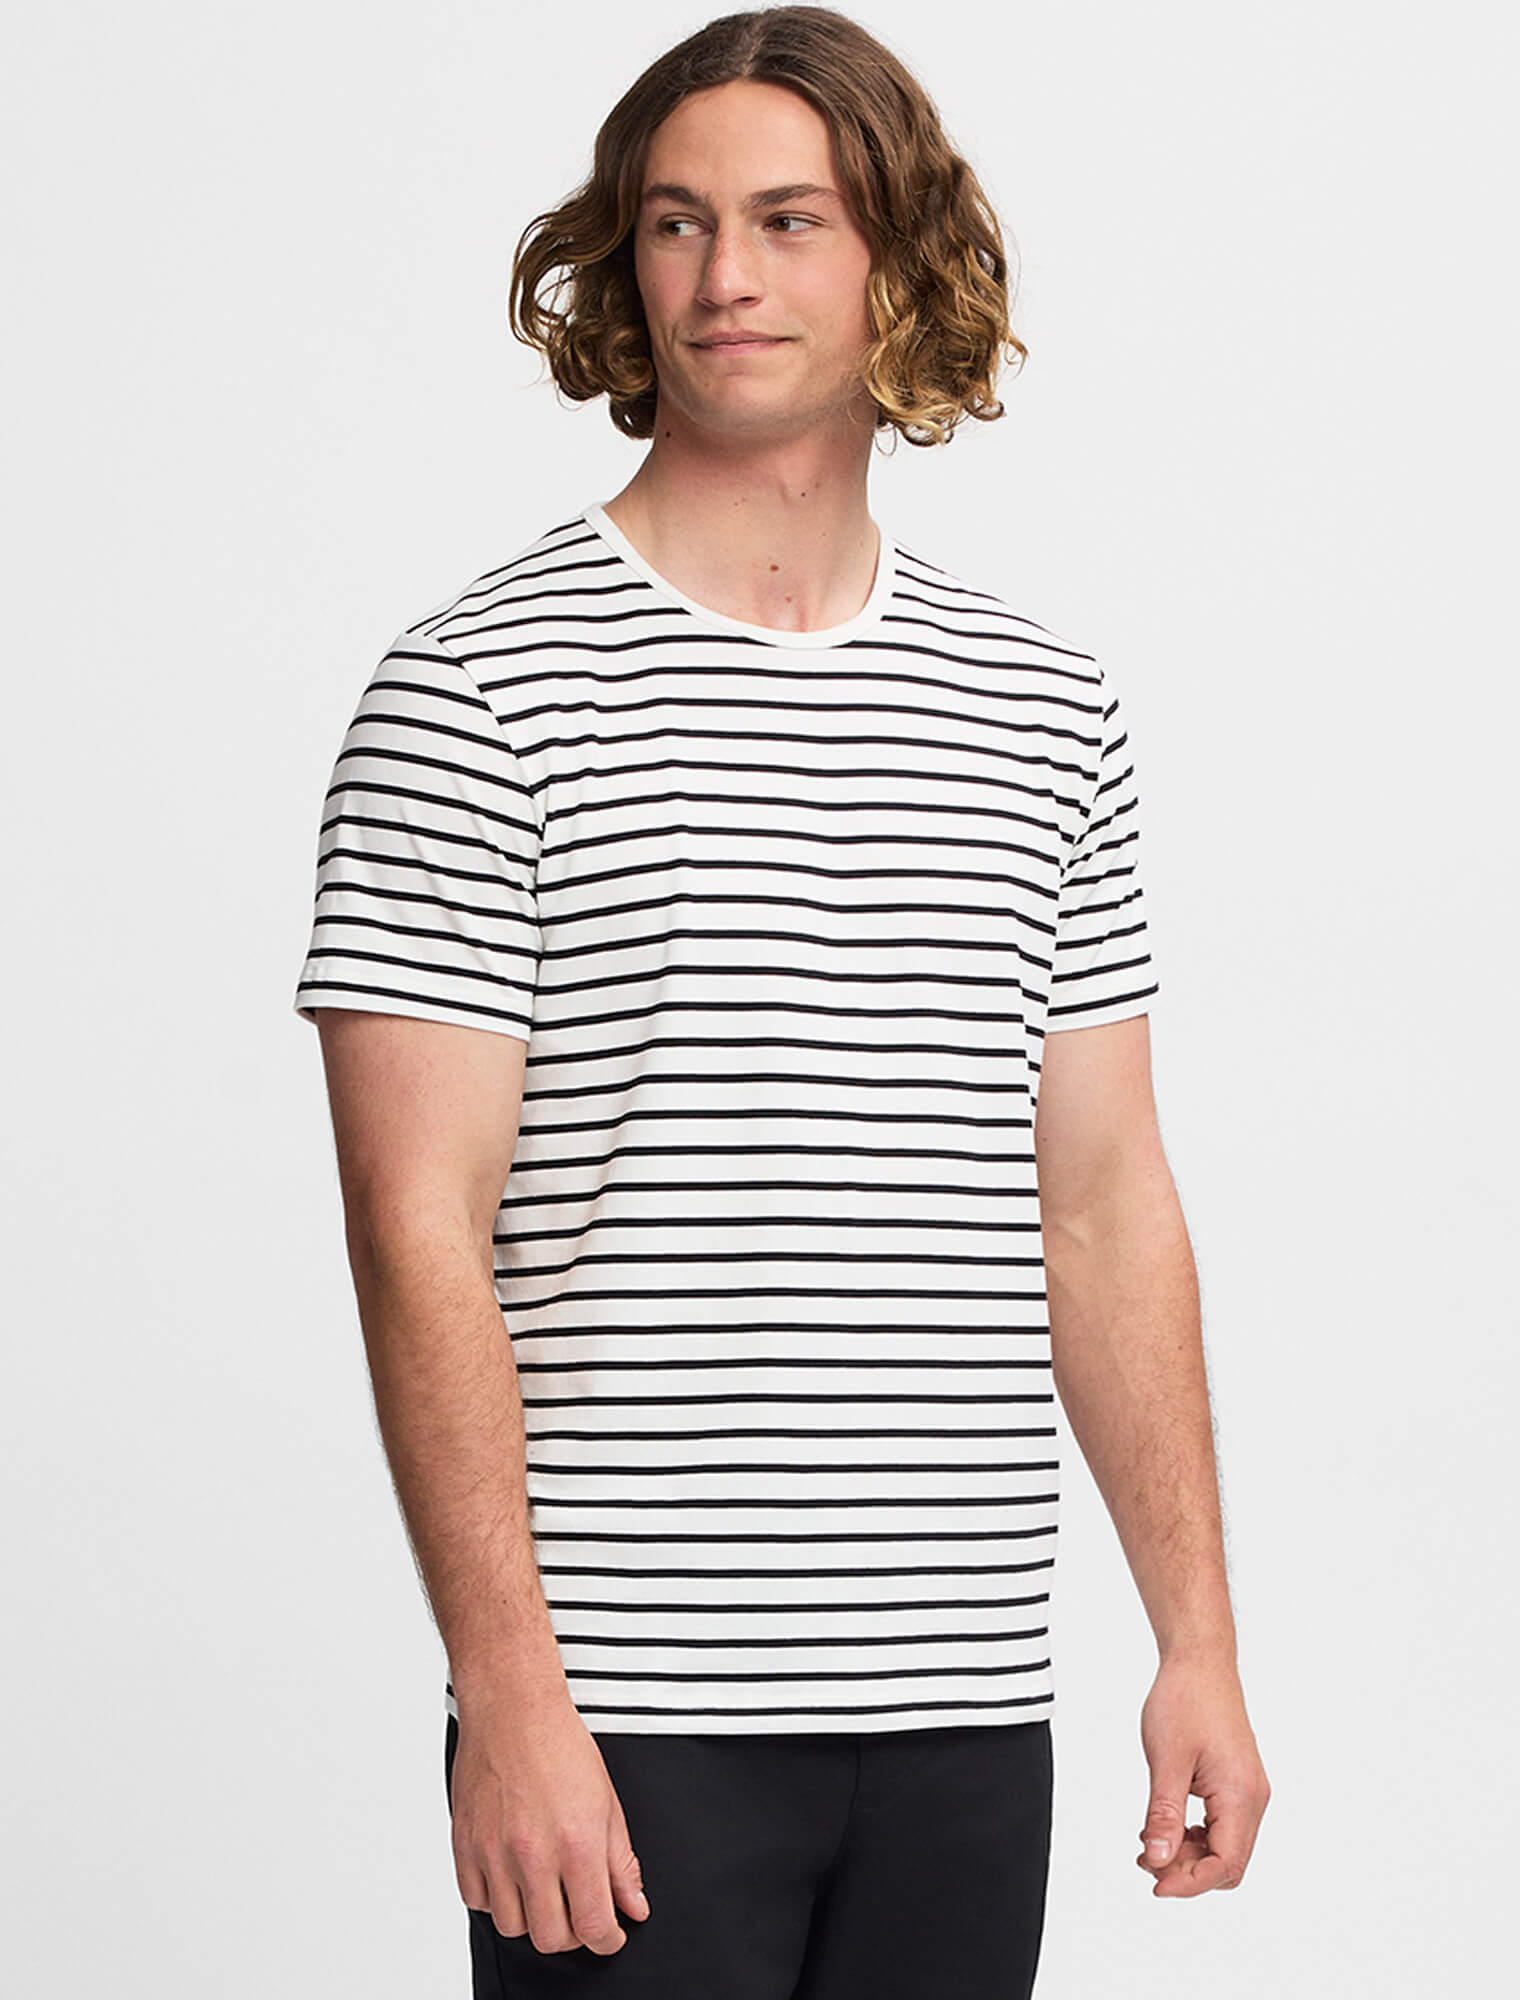 Men's Riviera Striped T-Shirt - Vanilla & Black Stripe Tee